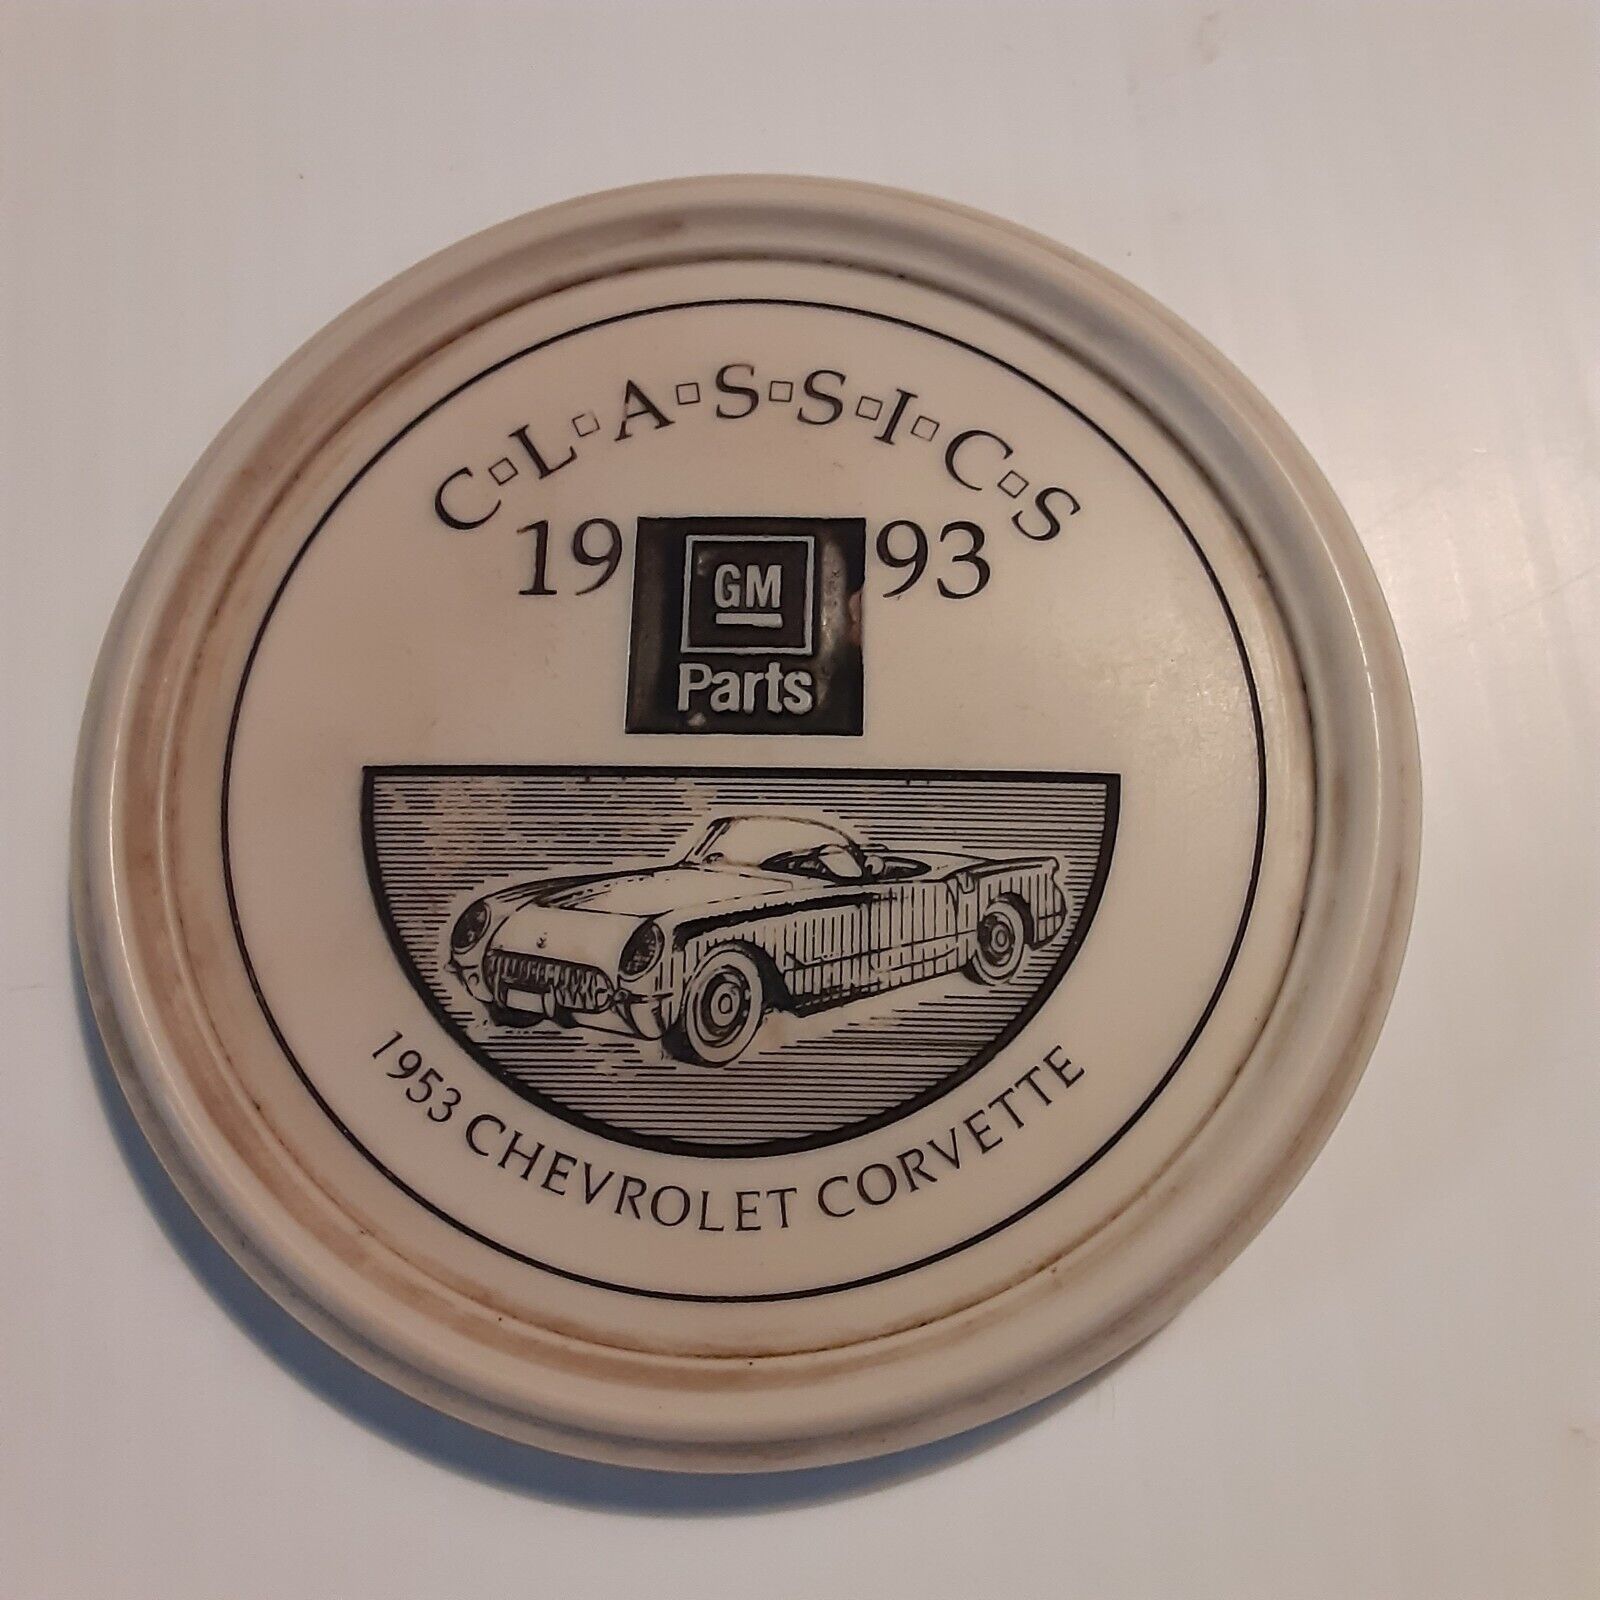 1953 1993 Chevrolet Corvette GM Parts Dealer Rare Collectible Drink Coaster